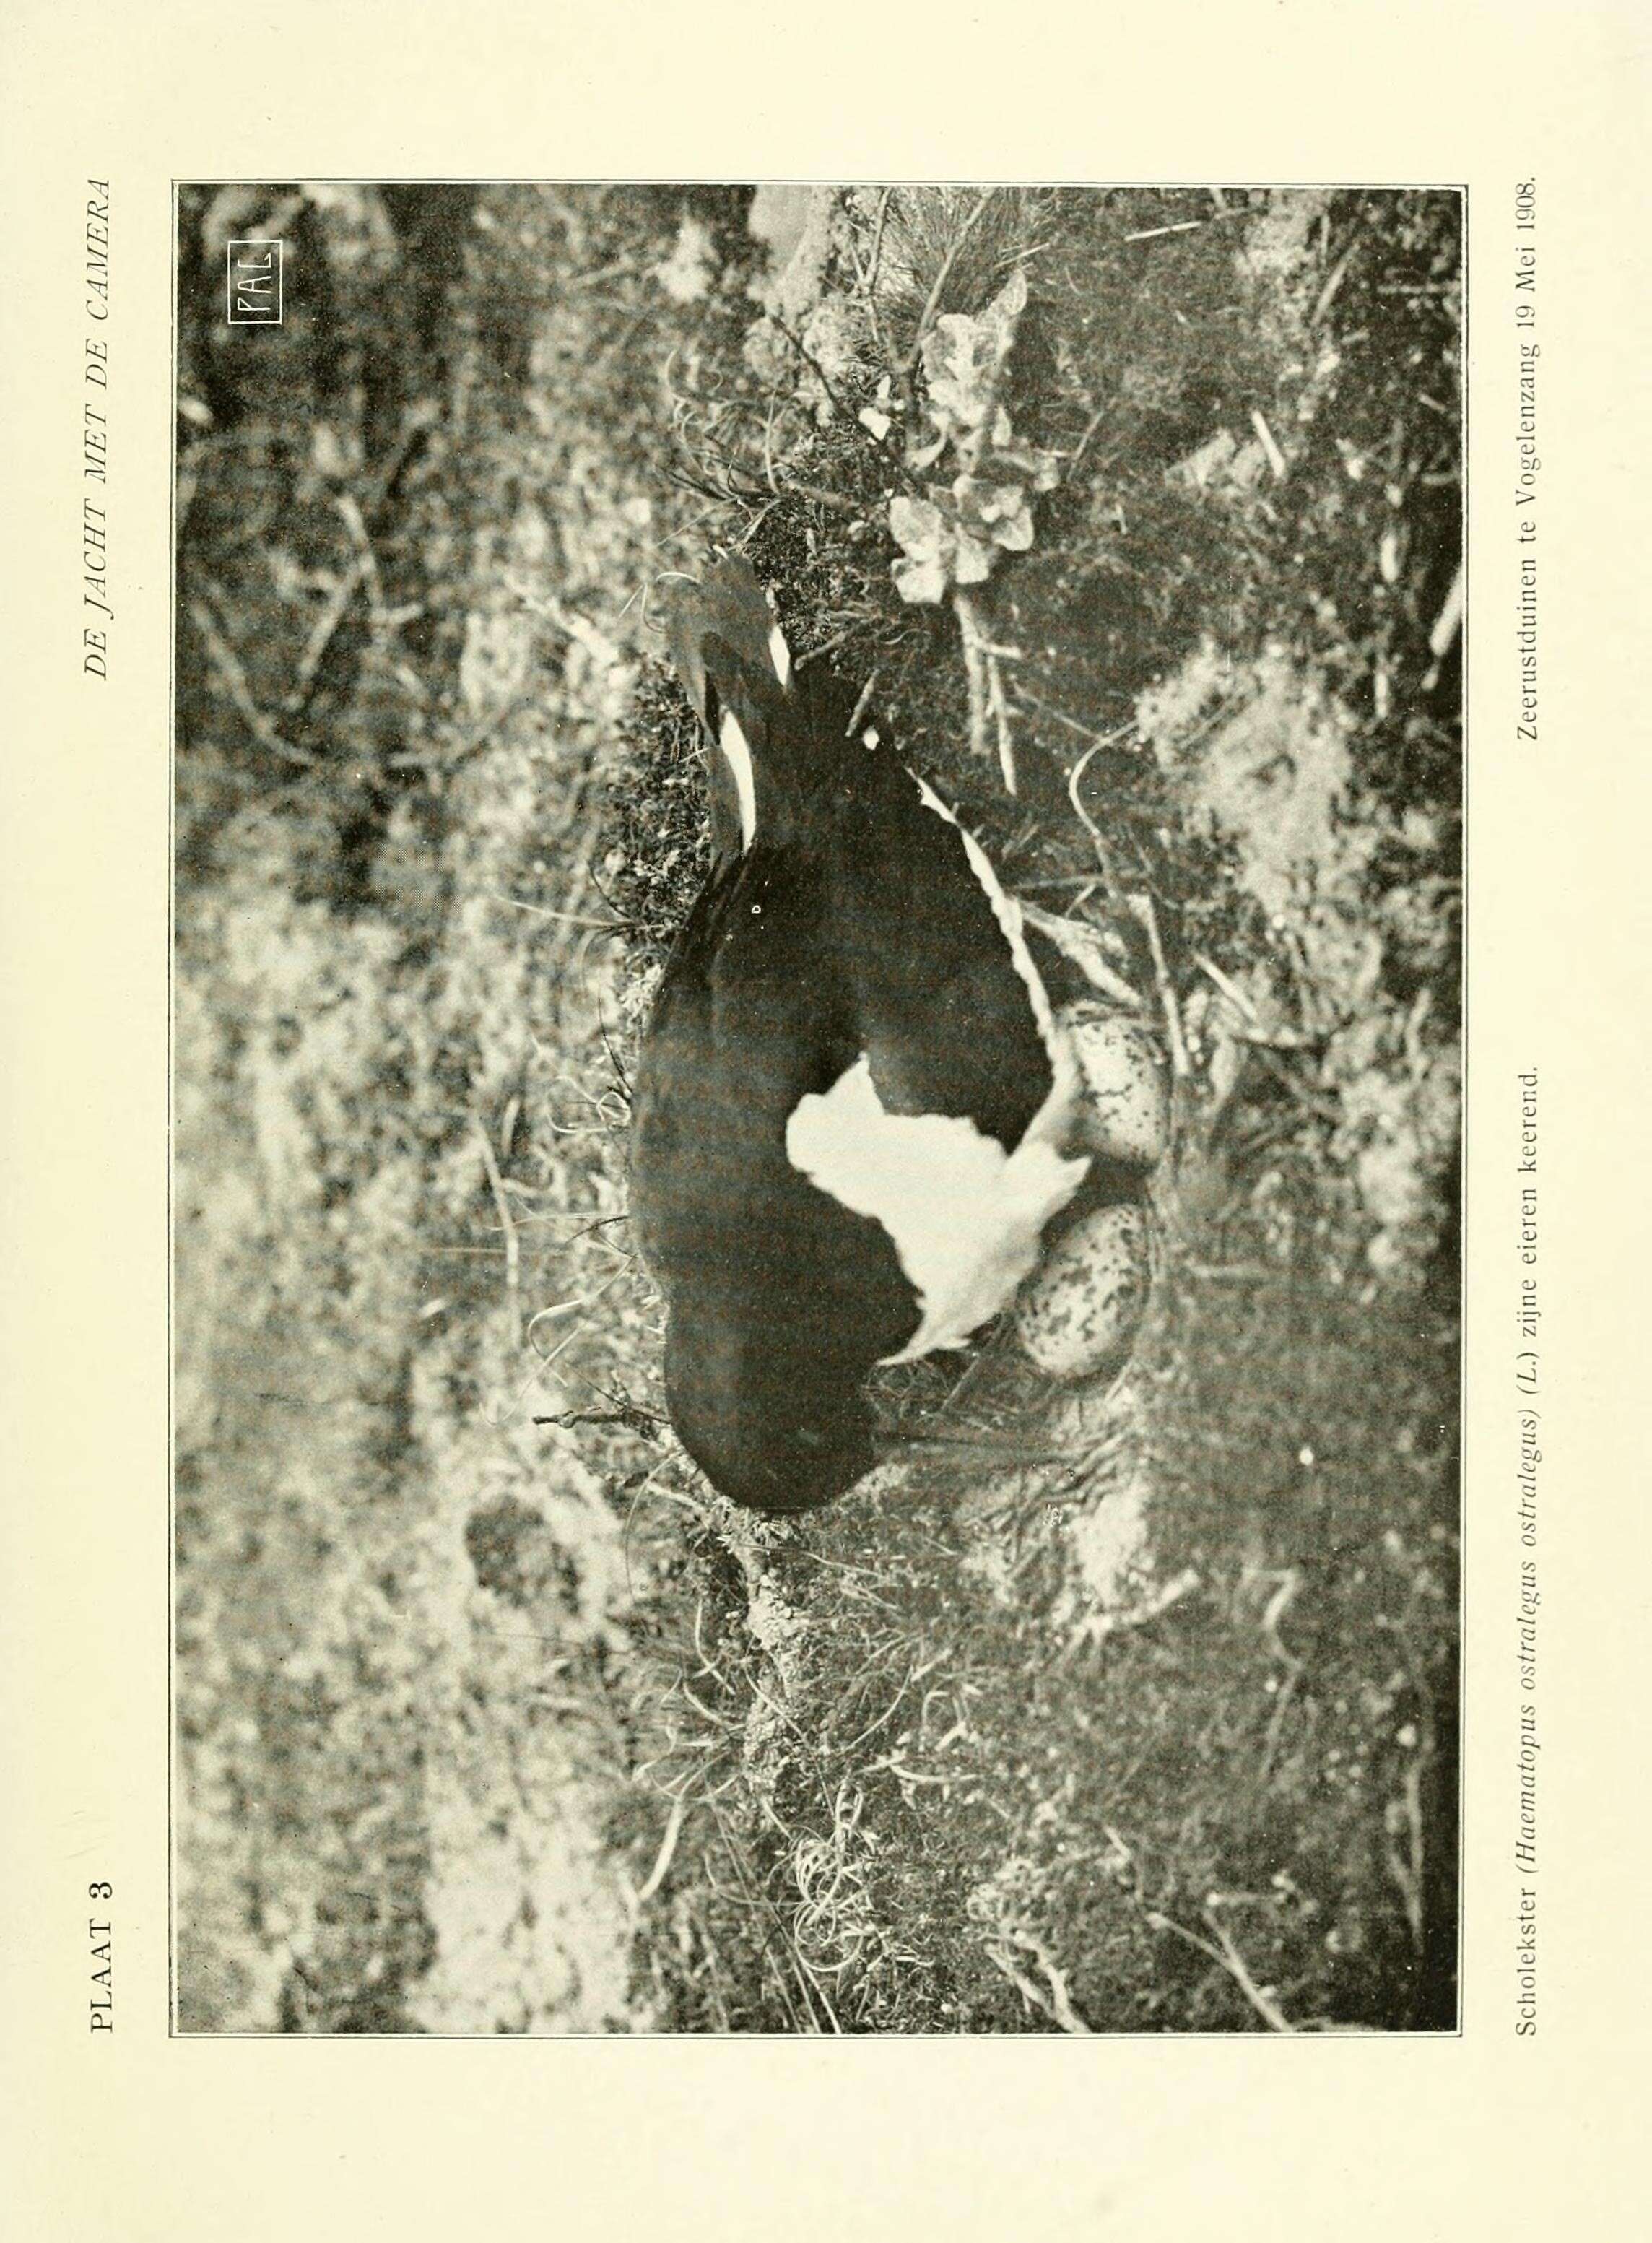 Image of oystercatcher, eurasian oystercatcher